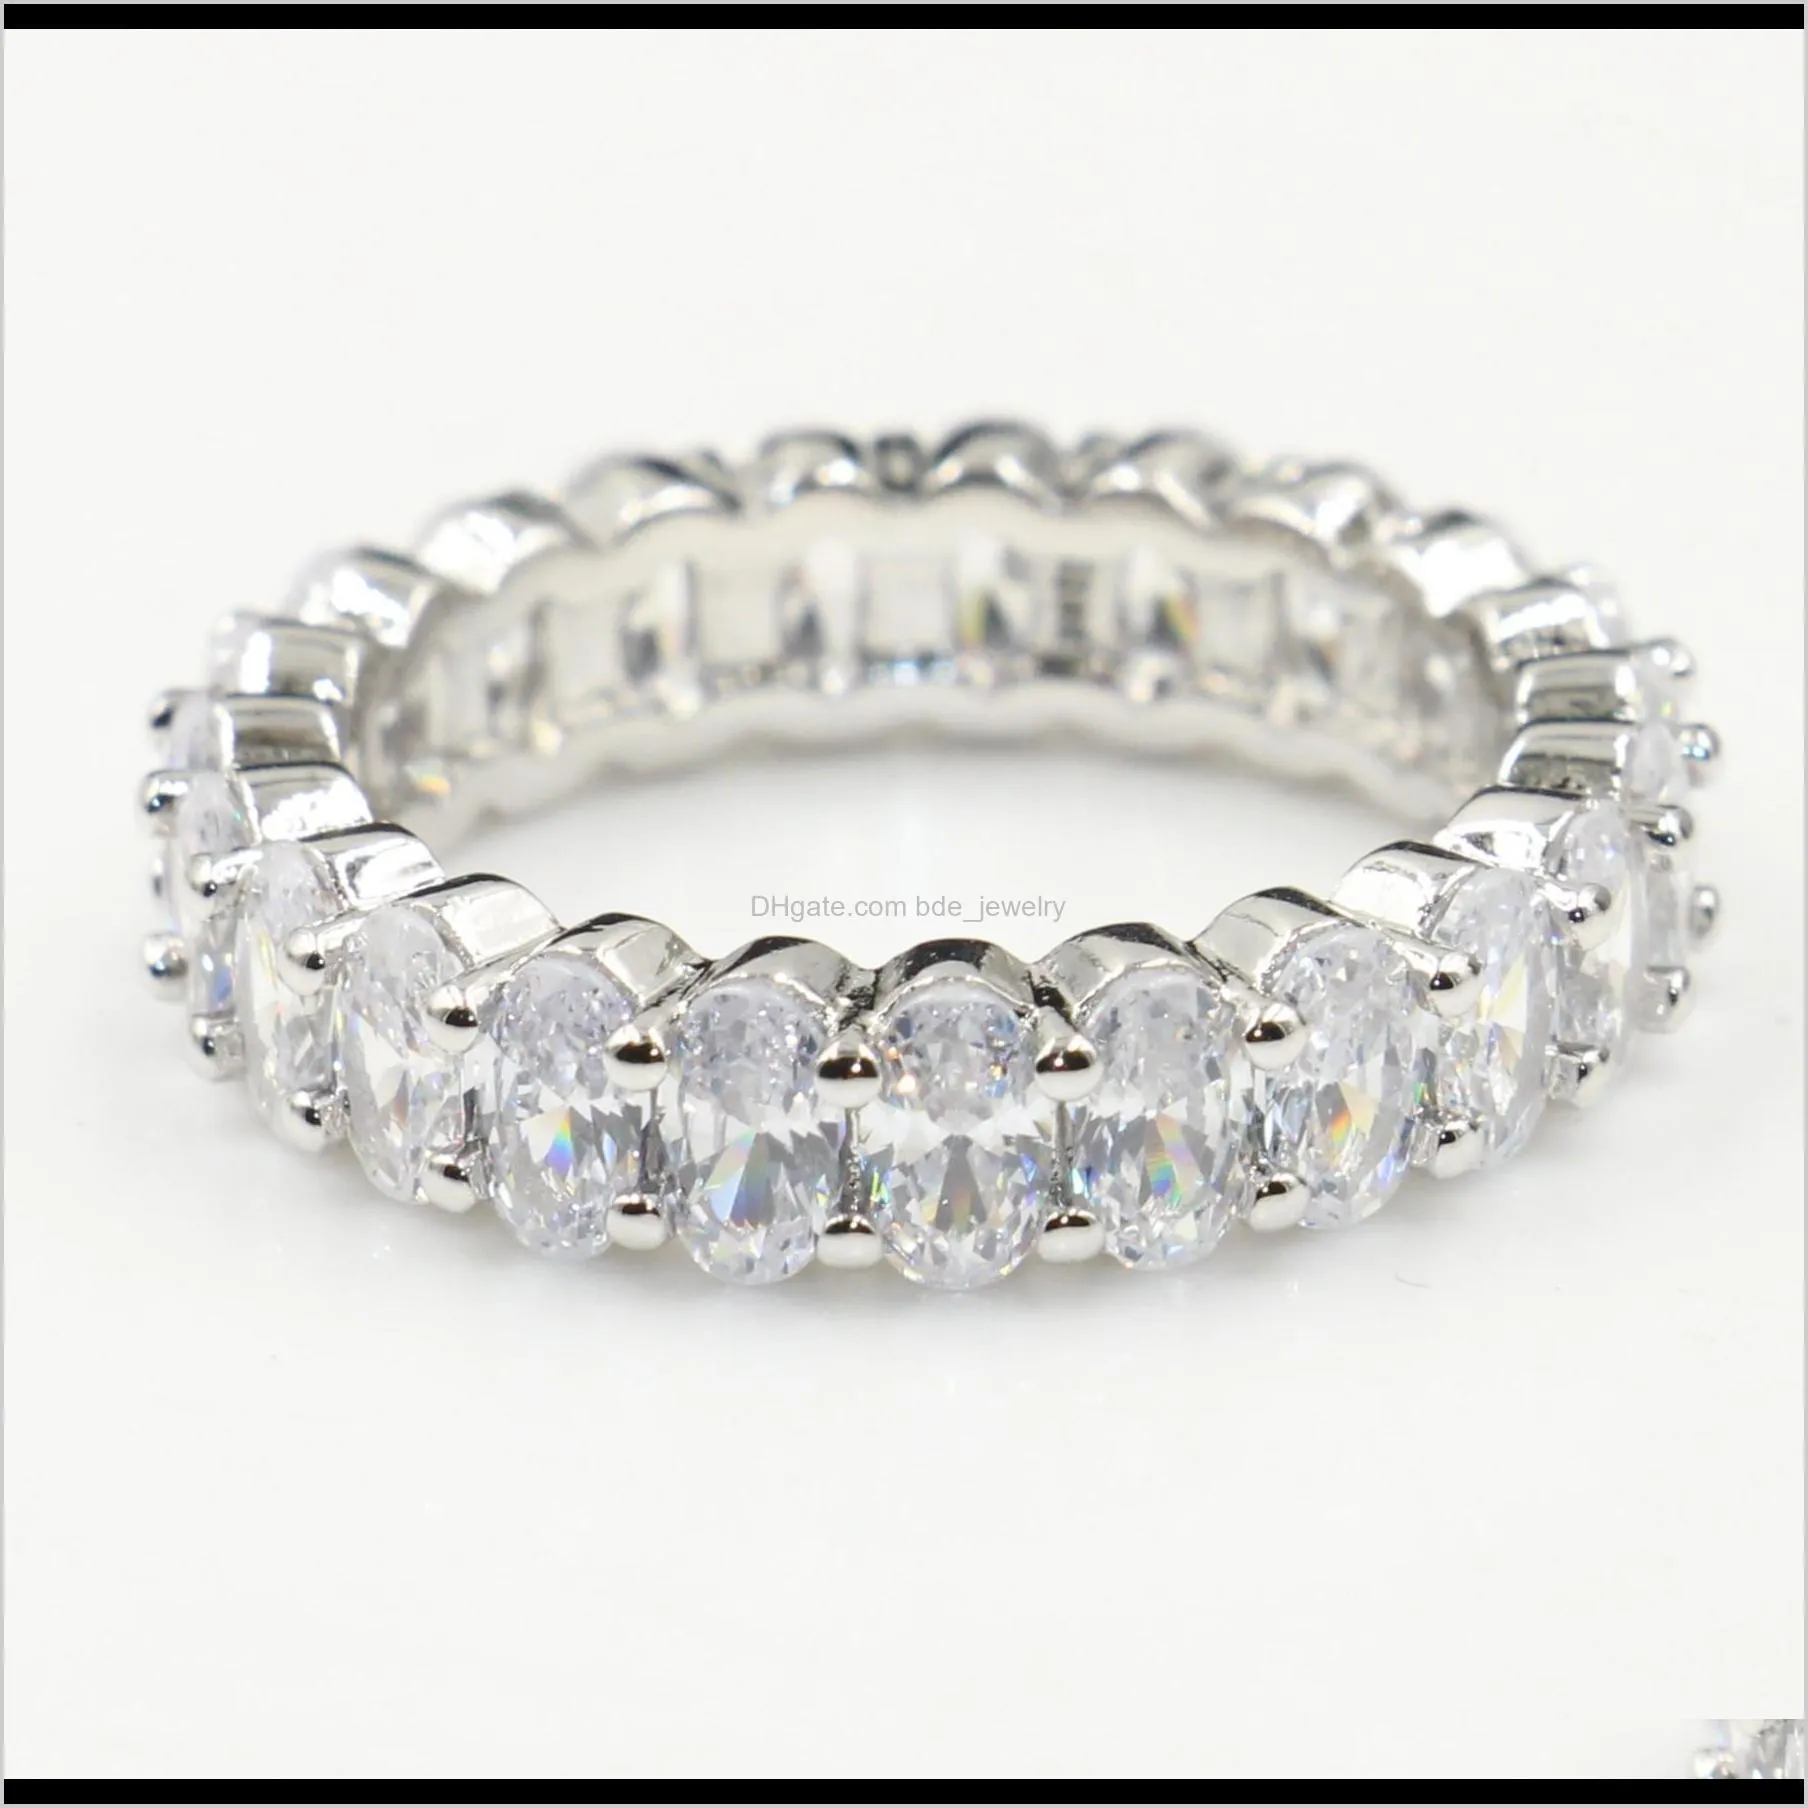 2pcs couple ring set luxury cute jewelry 925 sterling silver oavl cut white topaz cz diamond gemstones eternity women wedding bridal